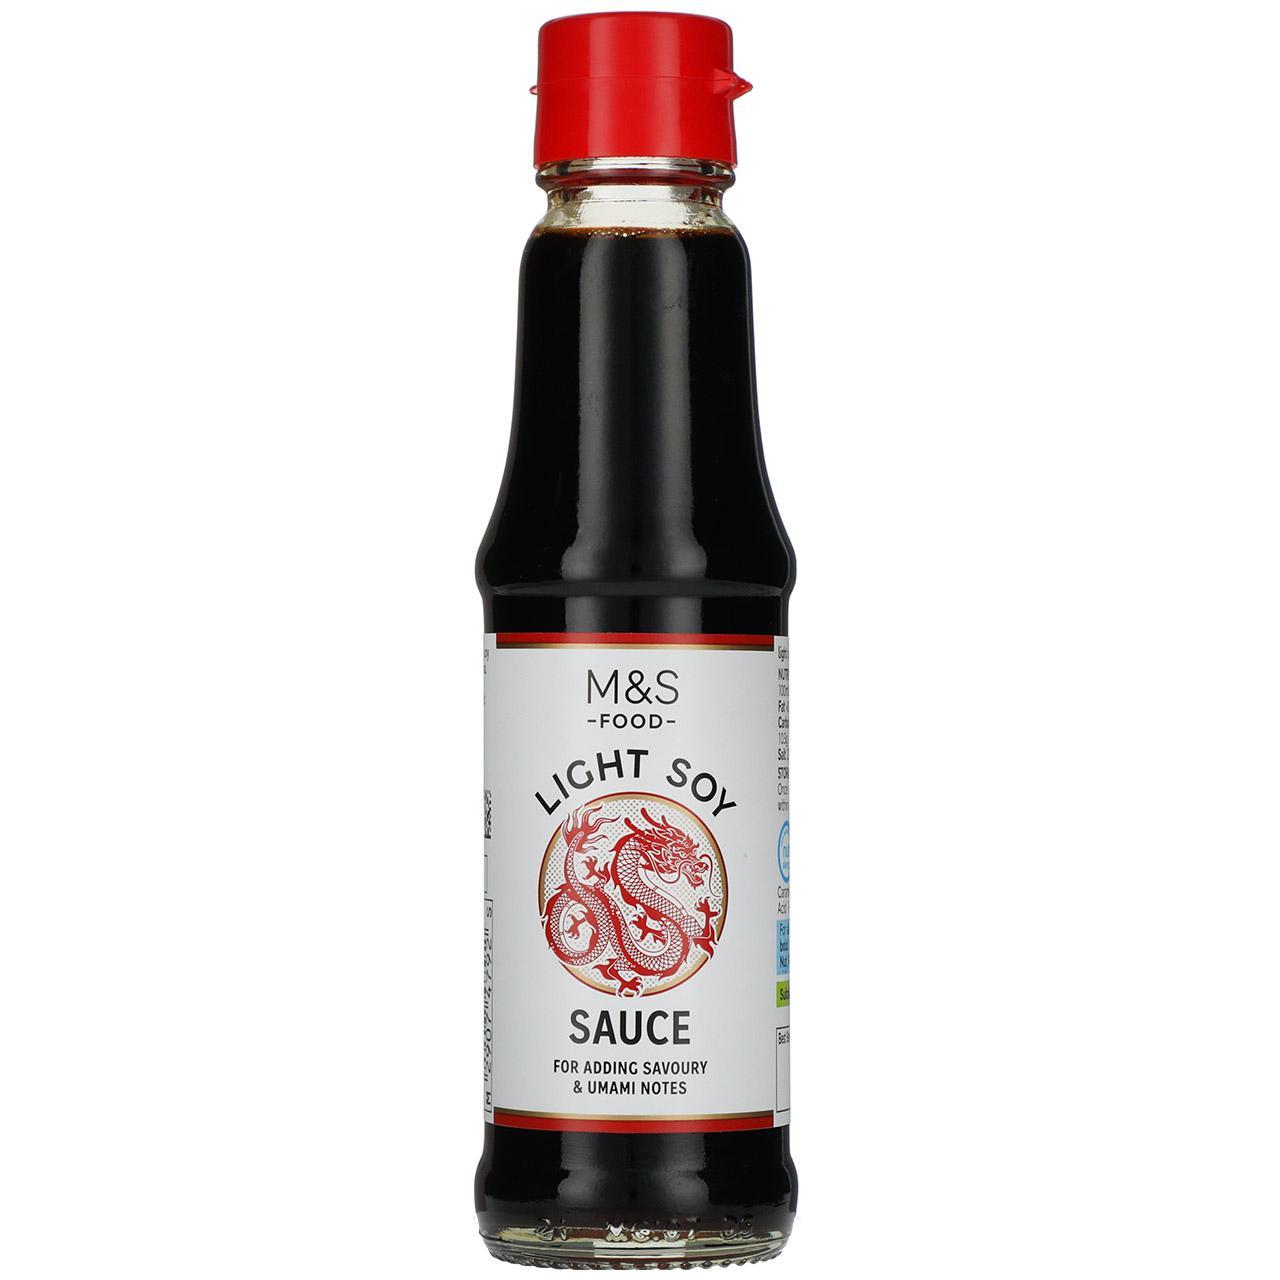 M&S Light Soy Sauce - HelloSupermarket